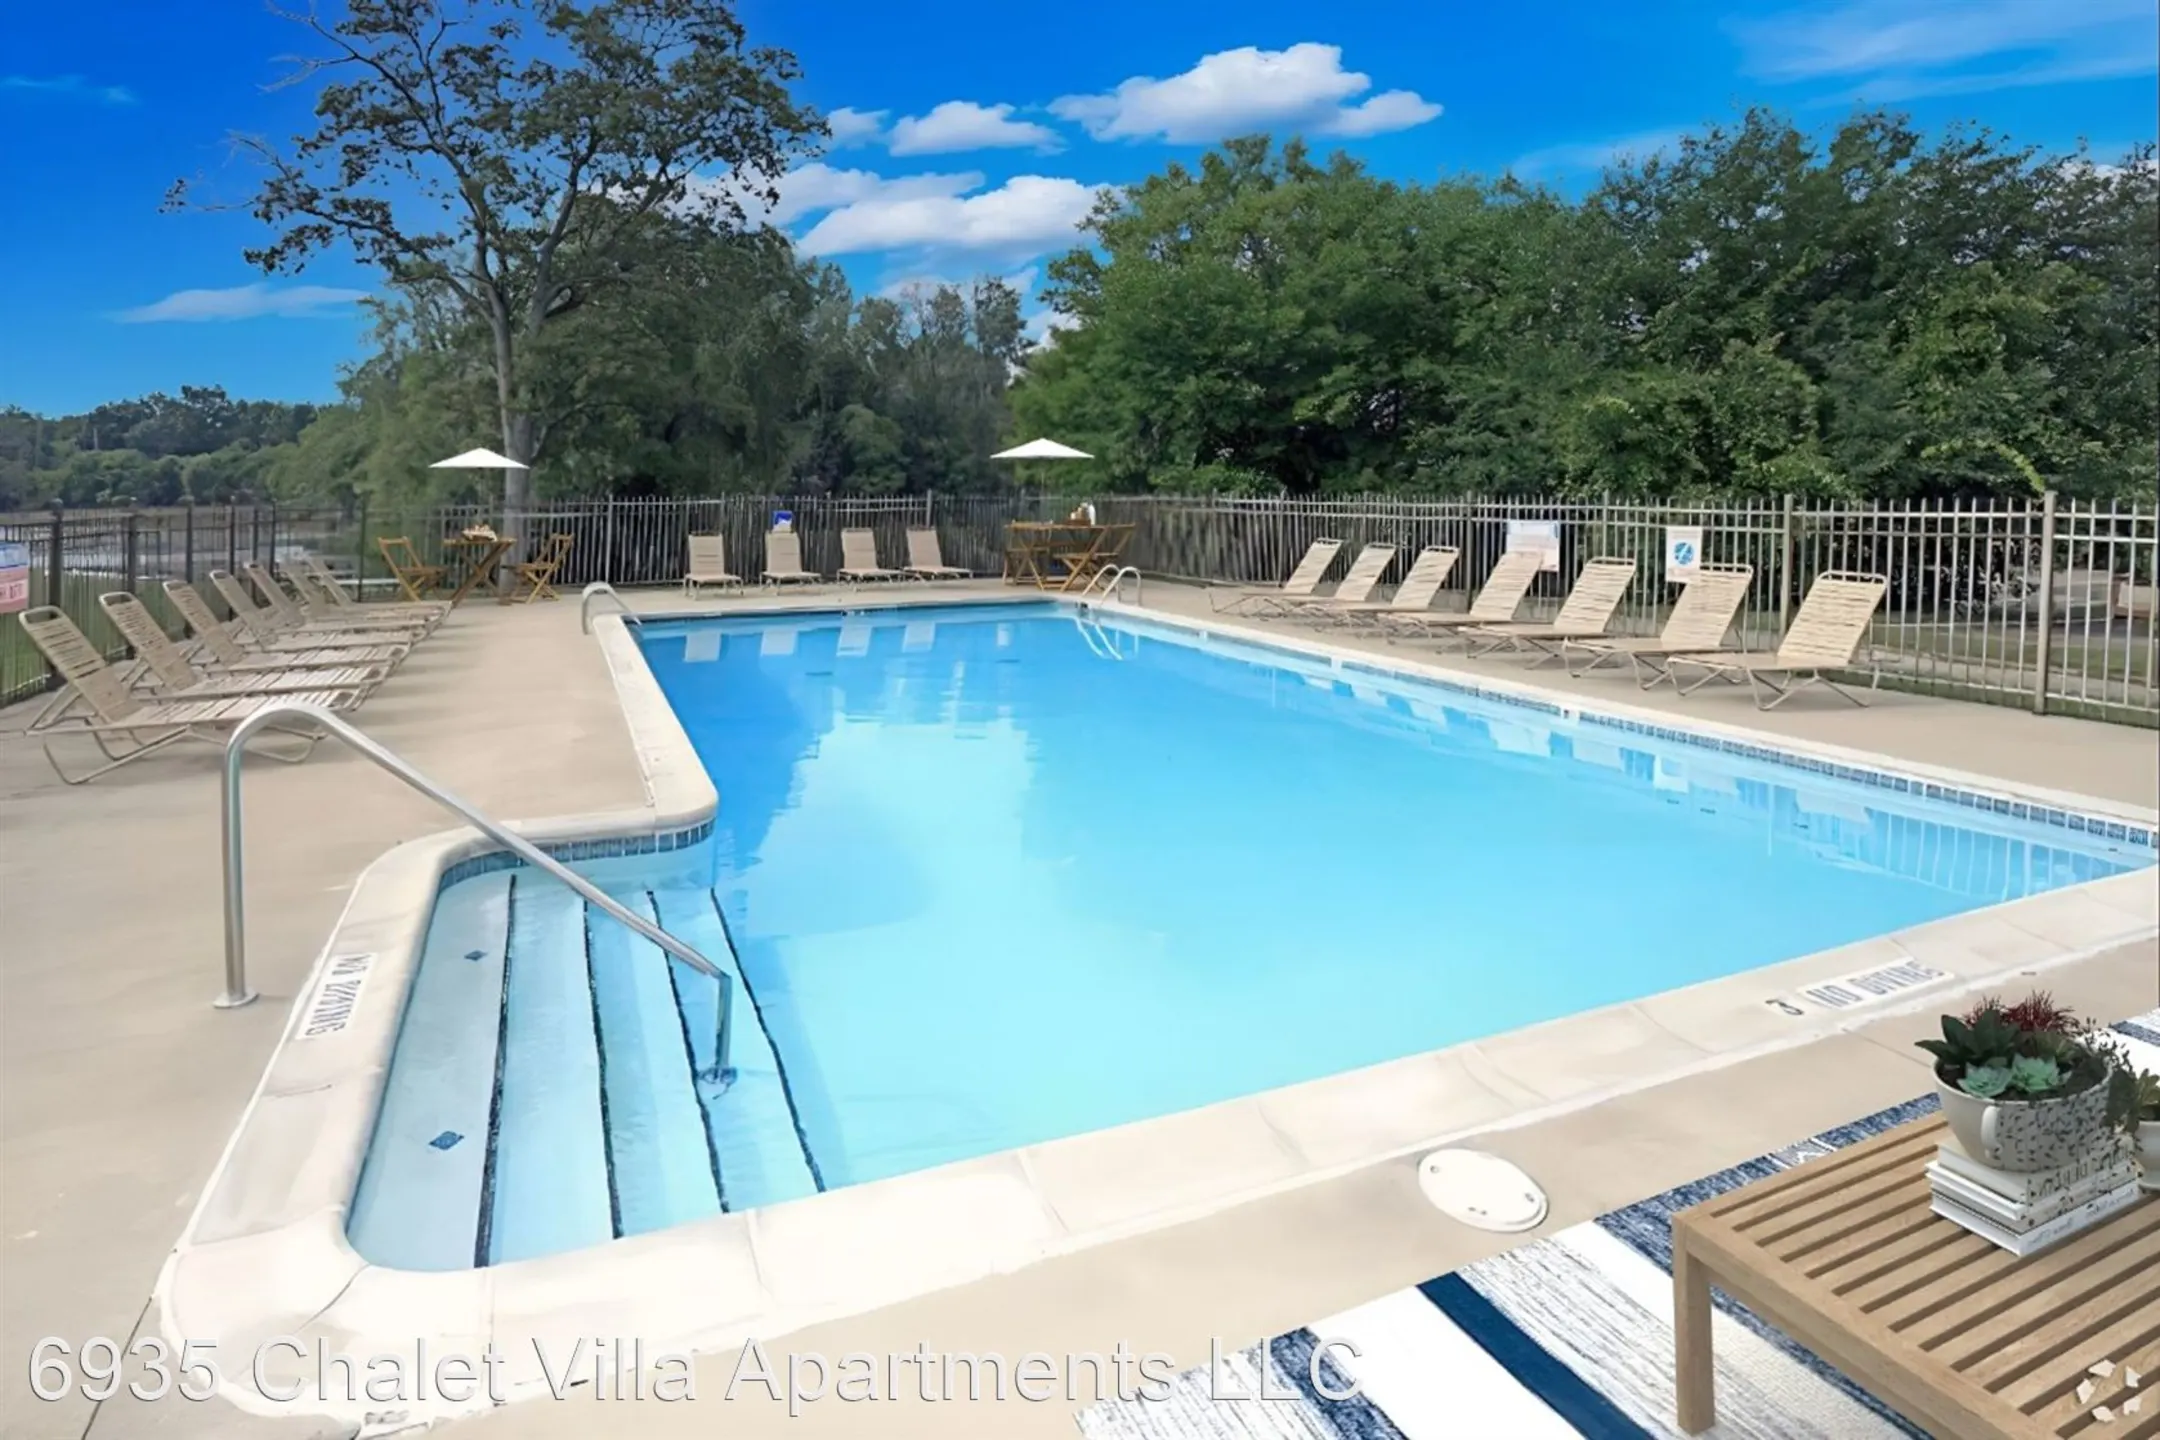 Pool - Chalet Villa Apartments - Clarkston, MI